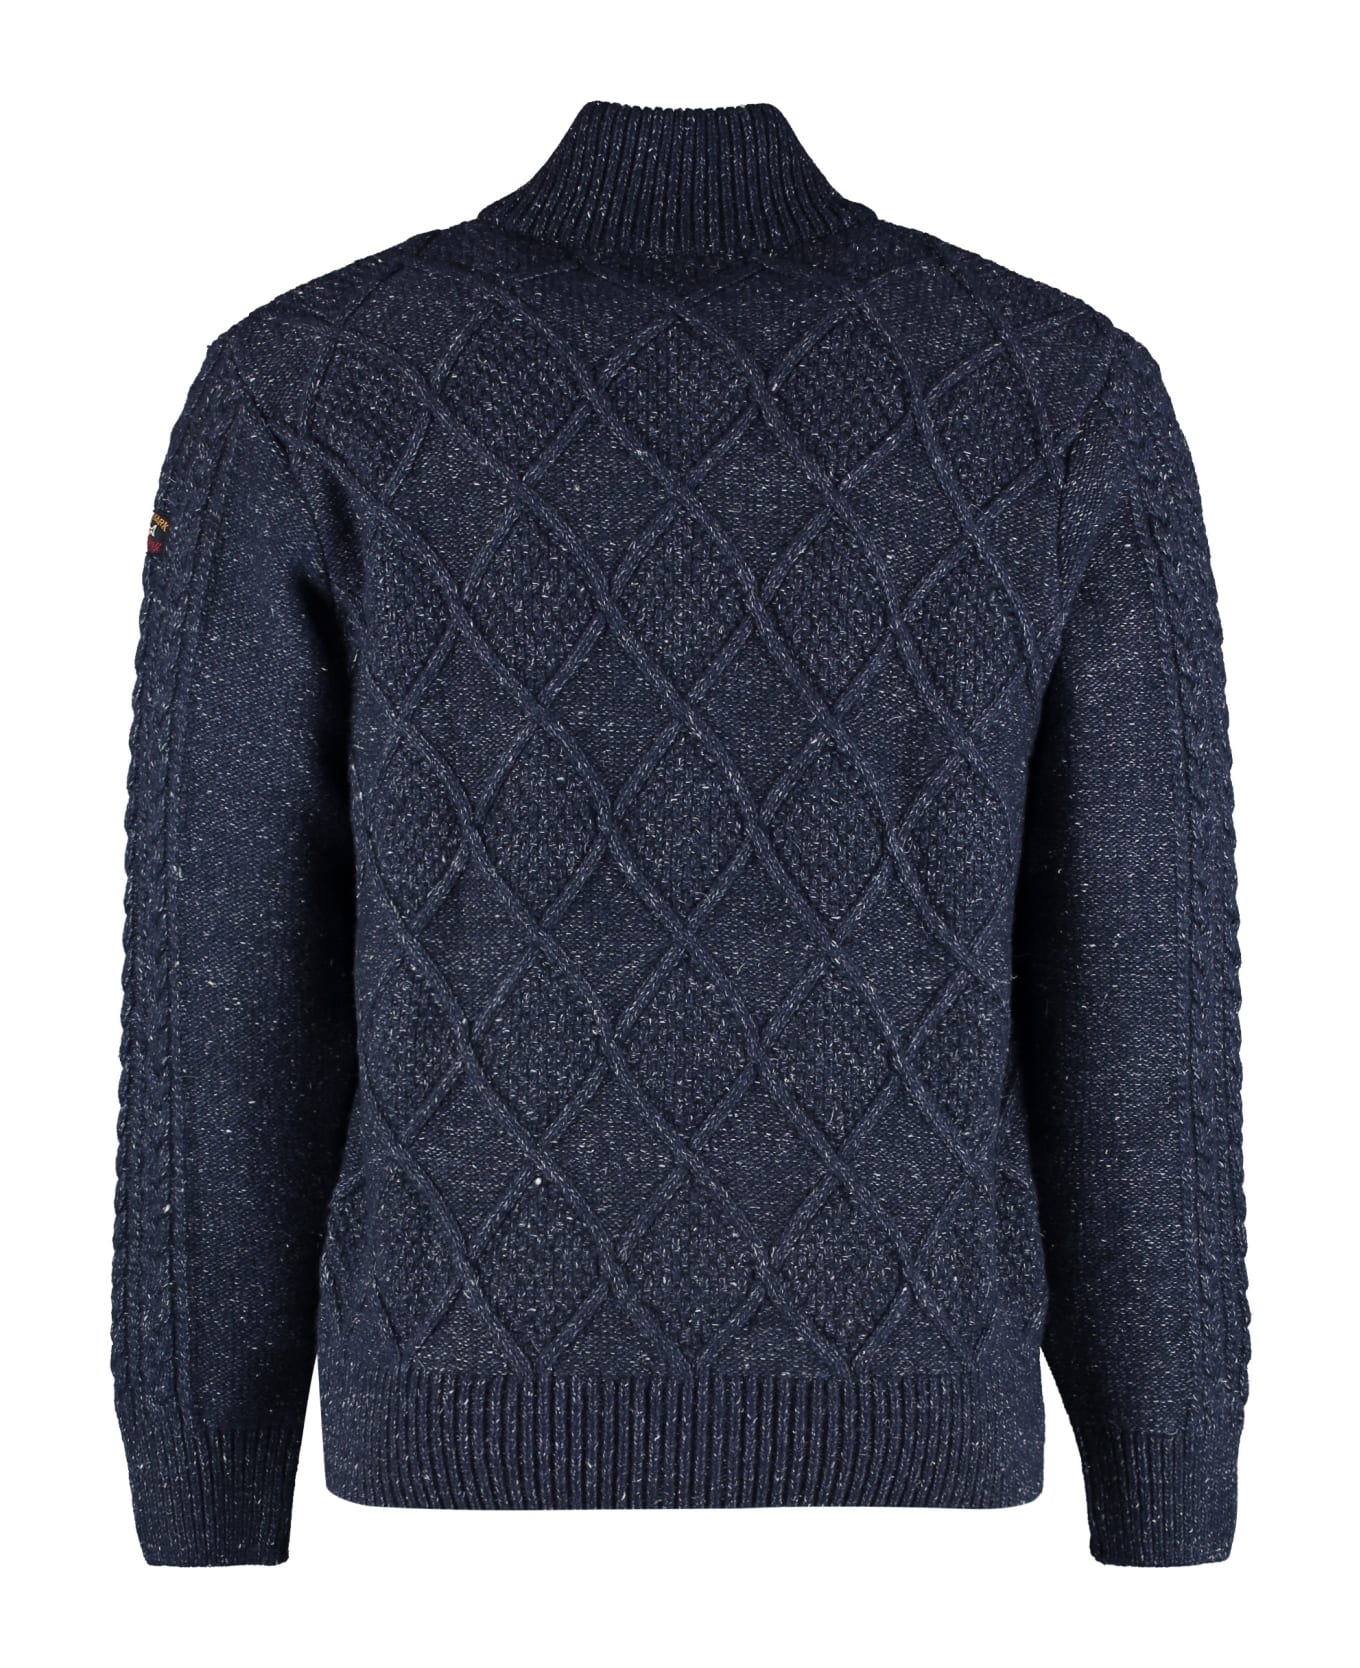 Paul&Shark Wool Blend Turtleneck Sweater - blue